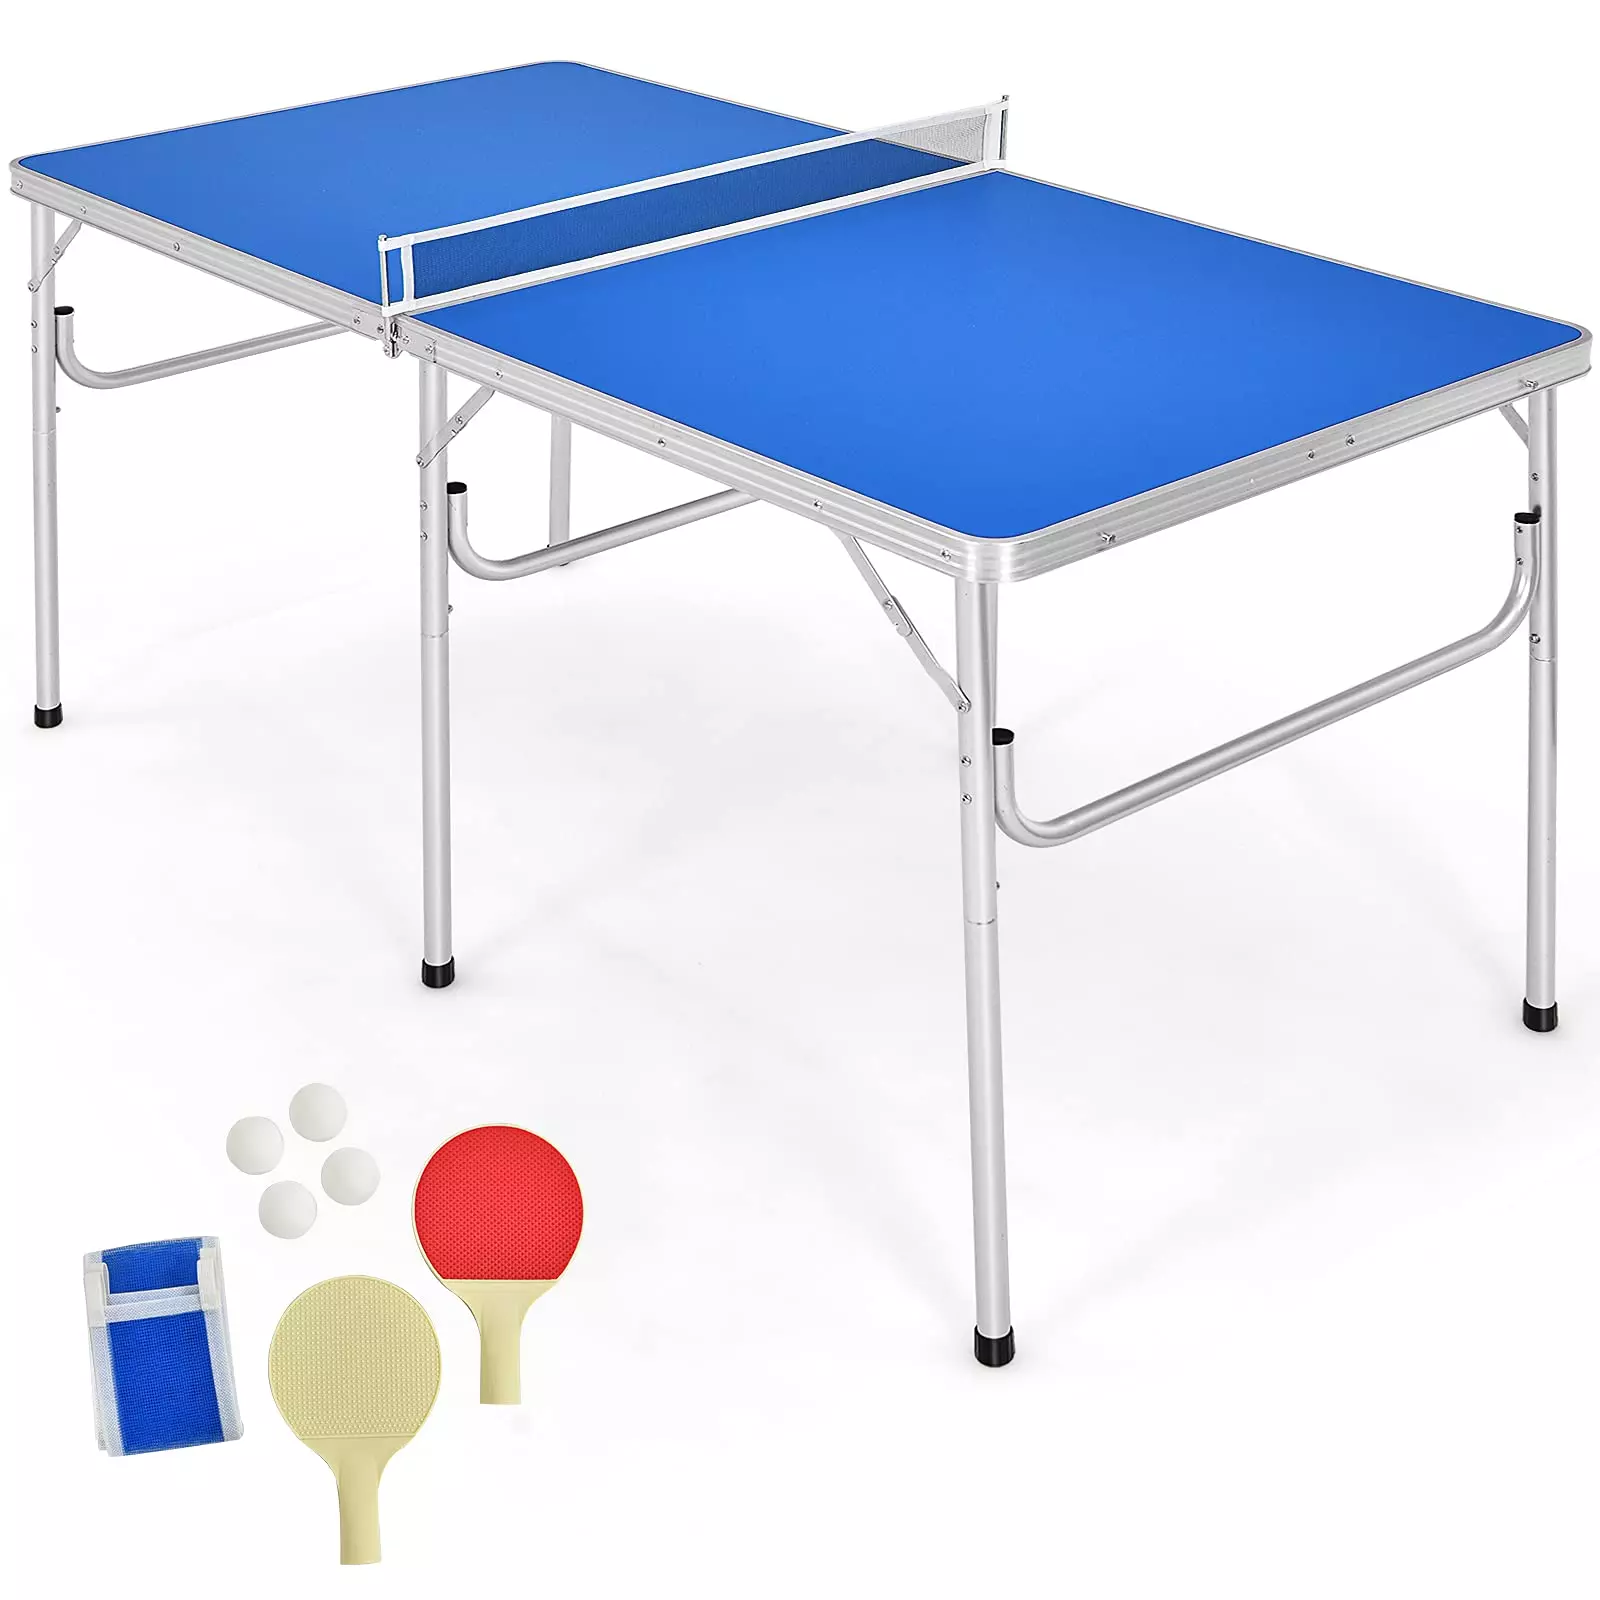 Goplus Portable Tennis Table